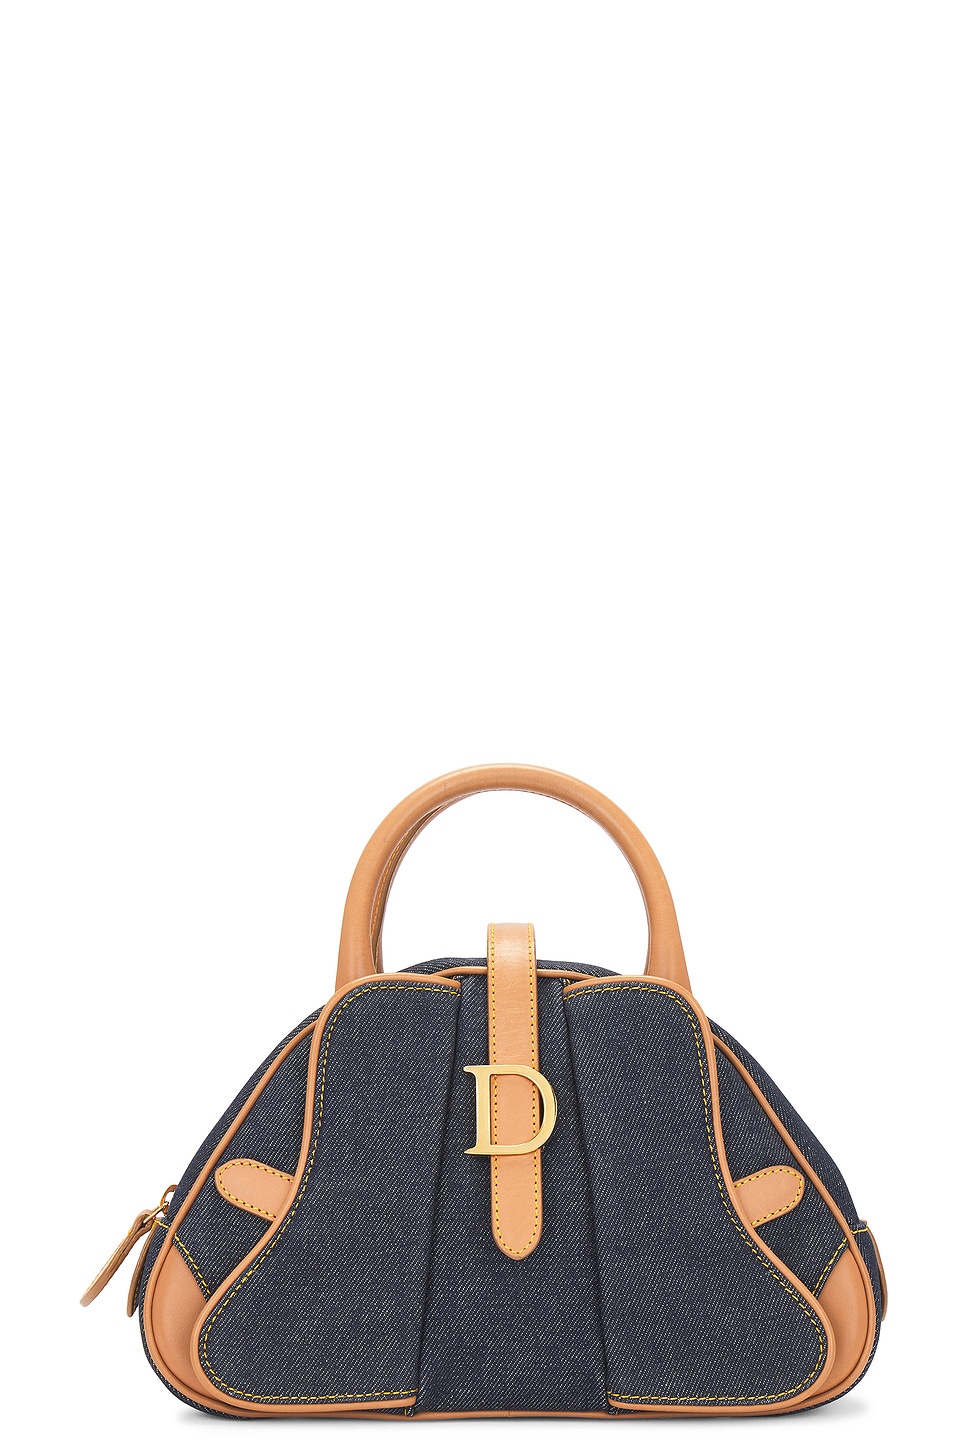 Dior Denim Handbag In Blue